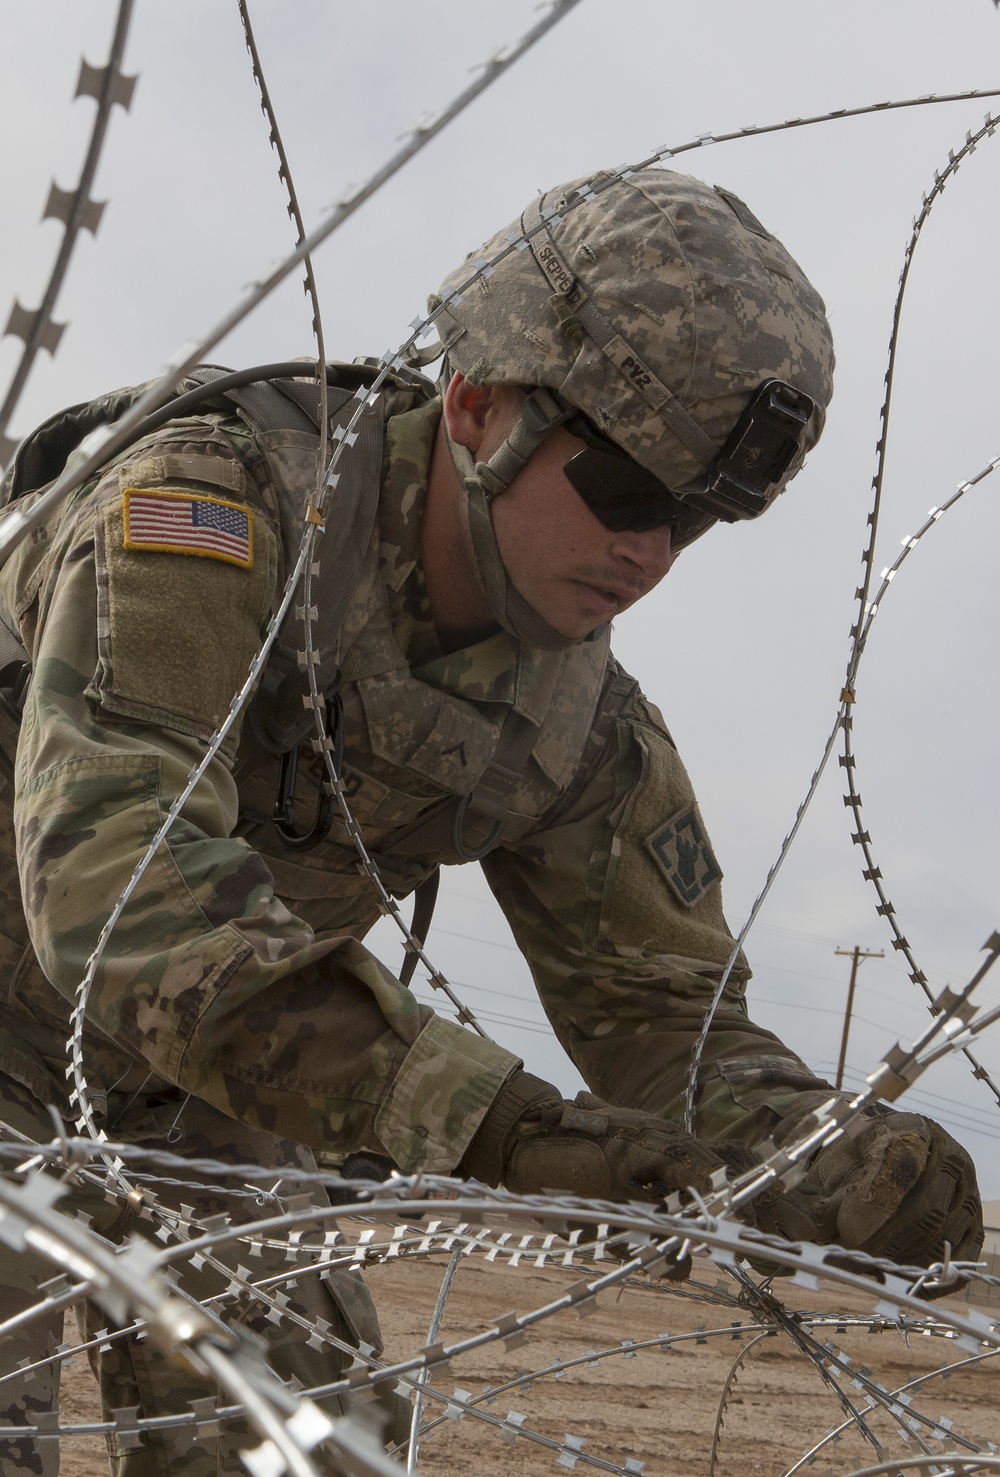 U.S. Army Engineers practice constructing barricades